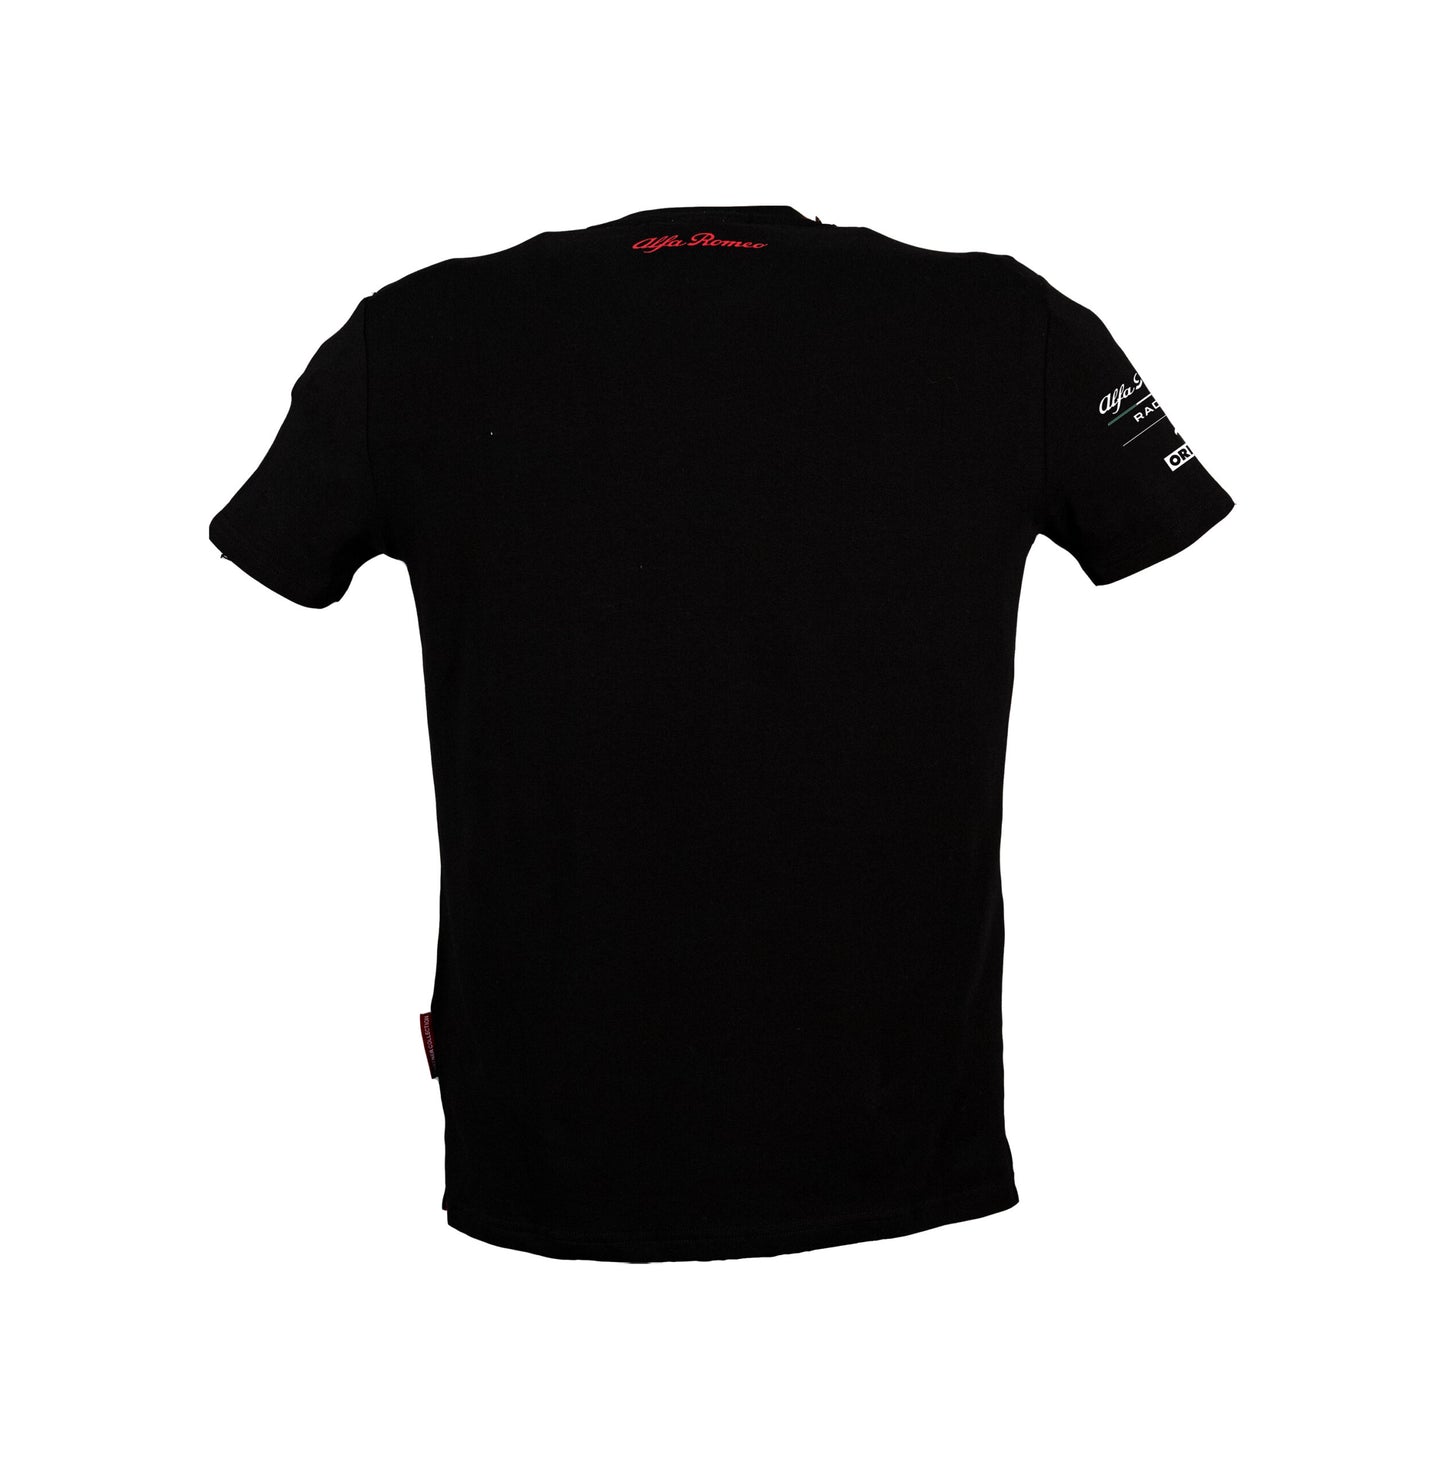 Alfa Romeo Silver Tribute T-Shirt Black